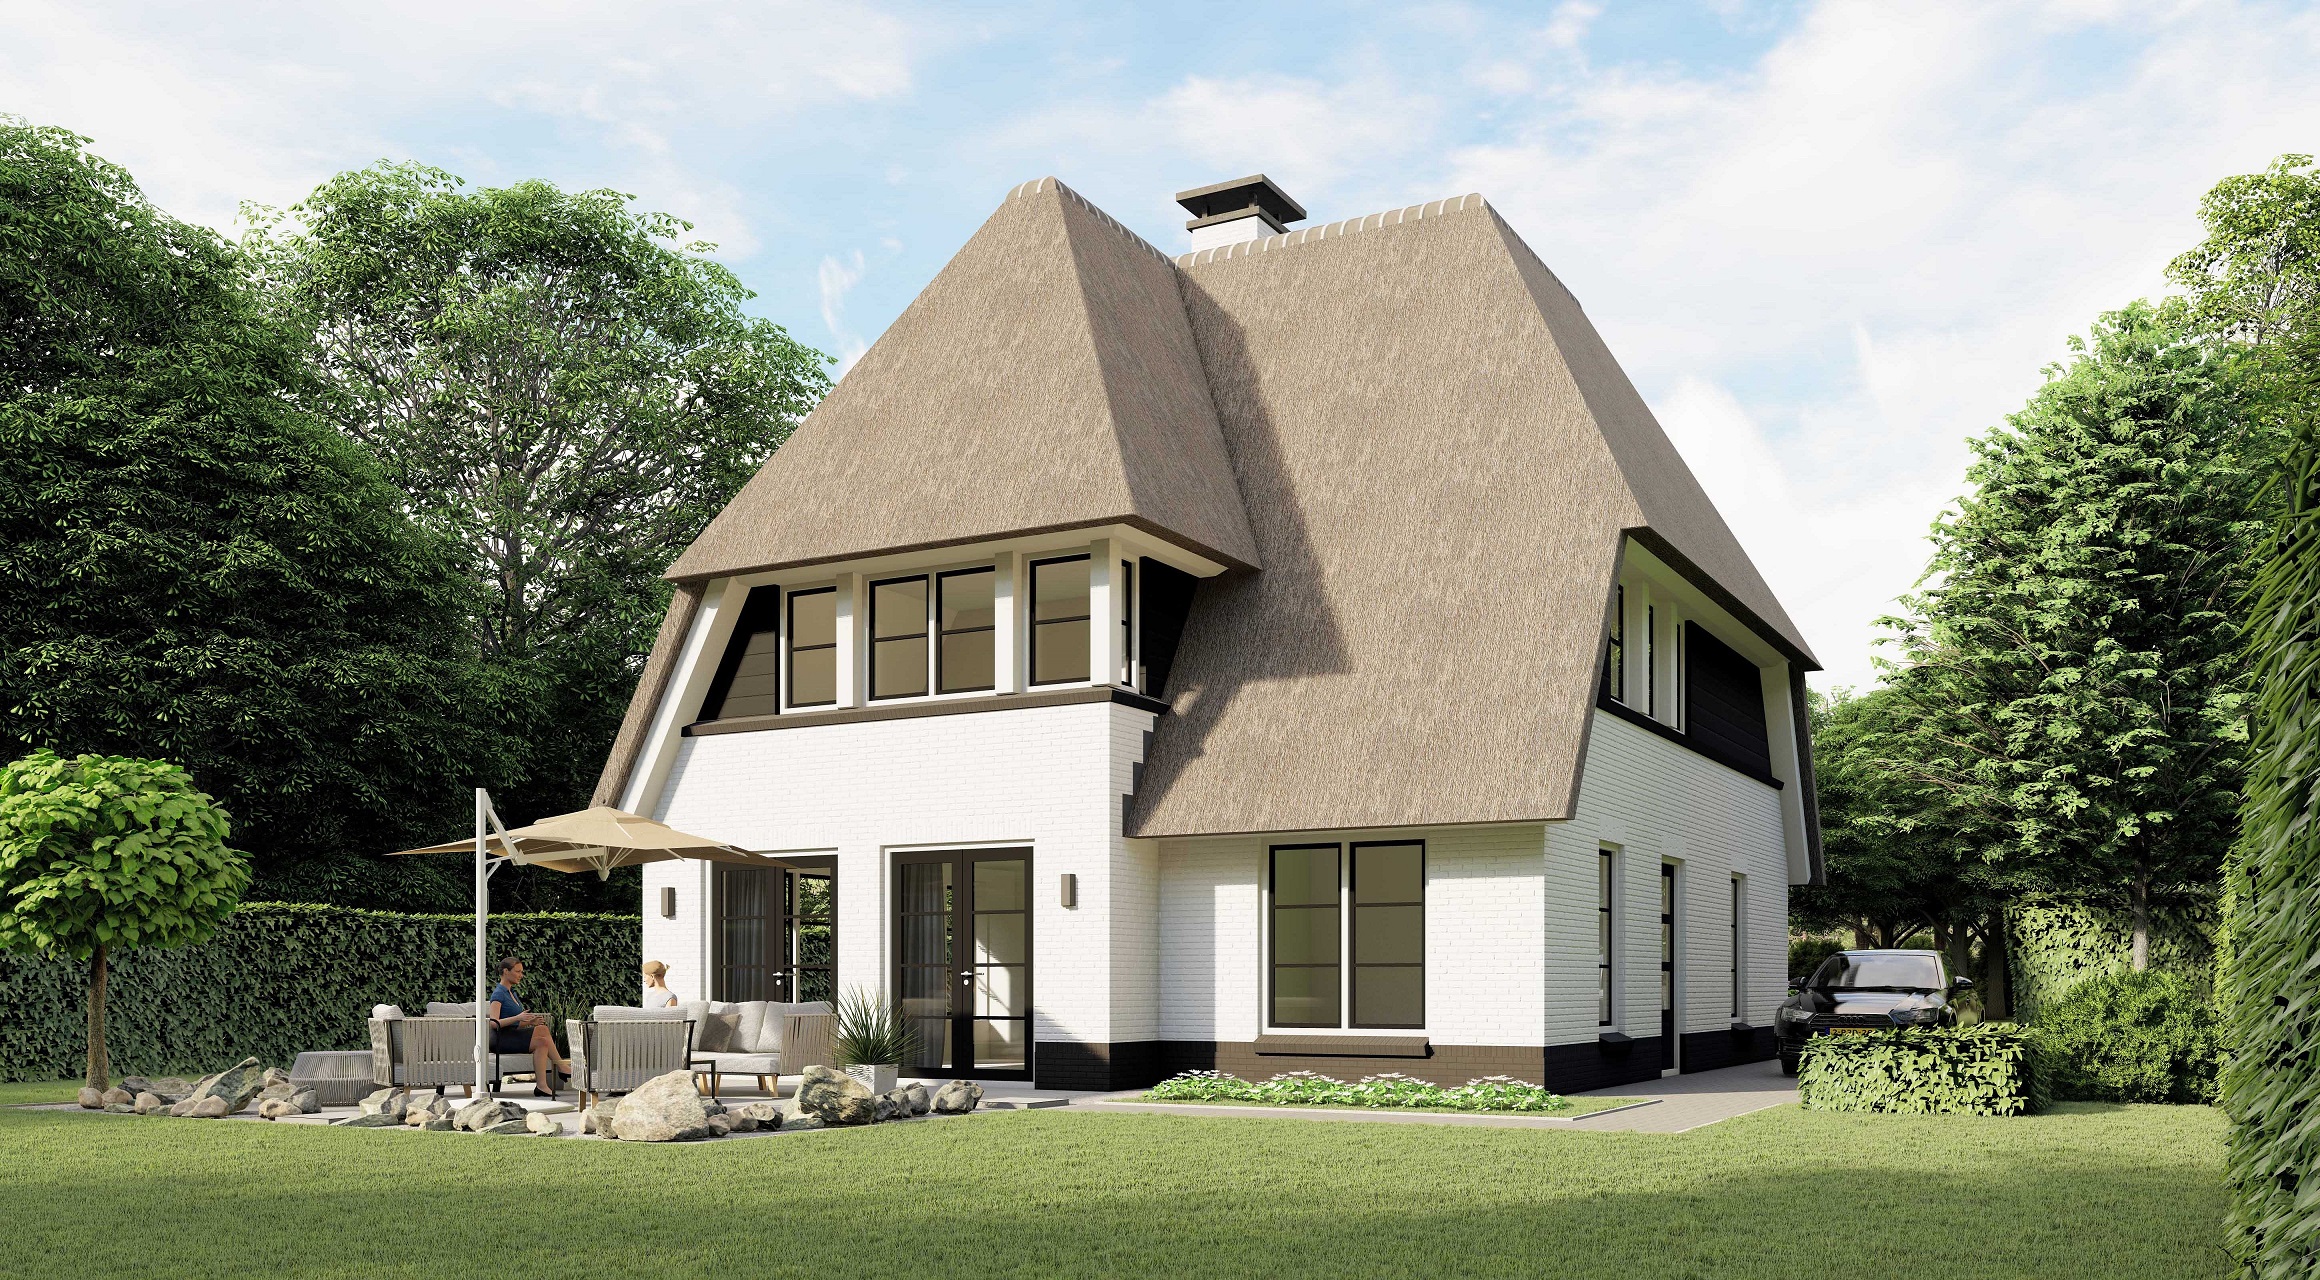 Foto: Huis bouwen  ndash  villatype Boswitje achtergevel   Architectuurwonen